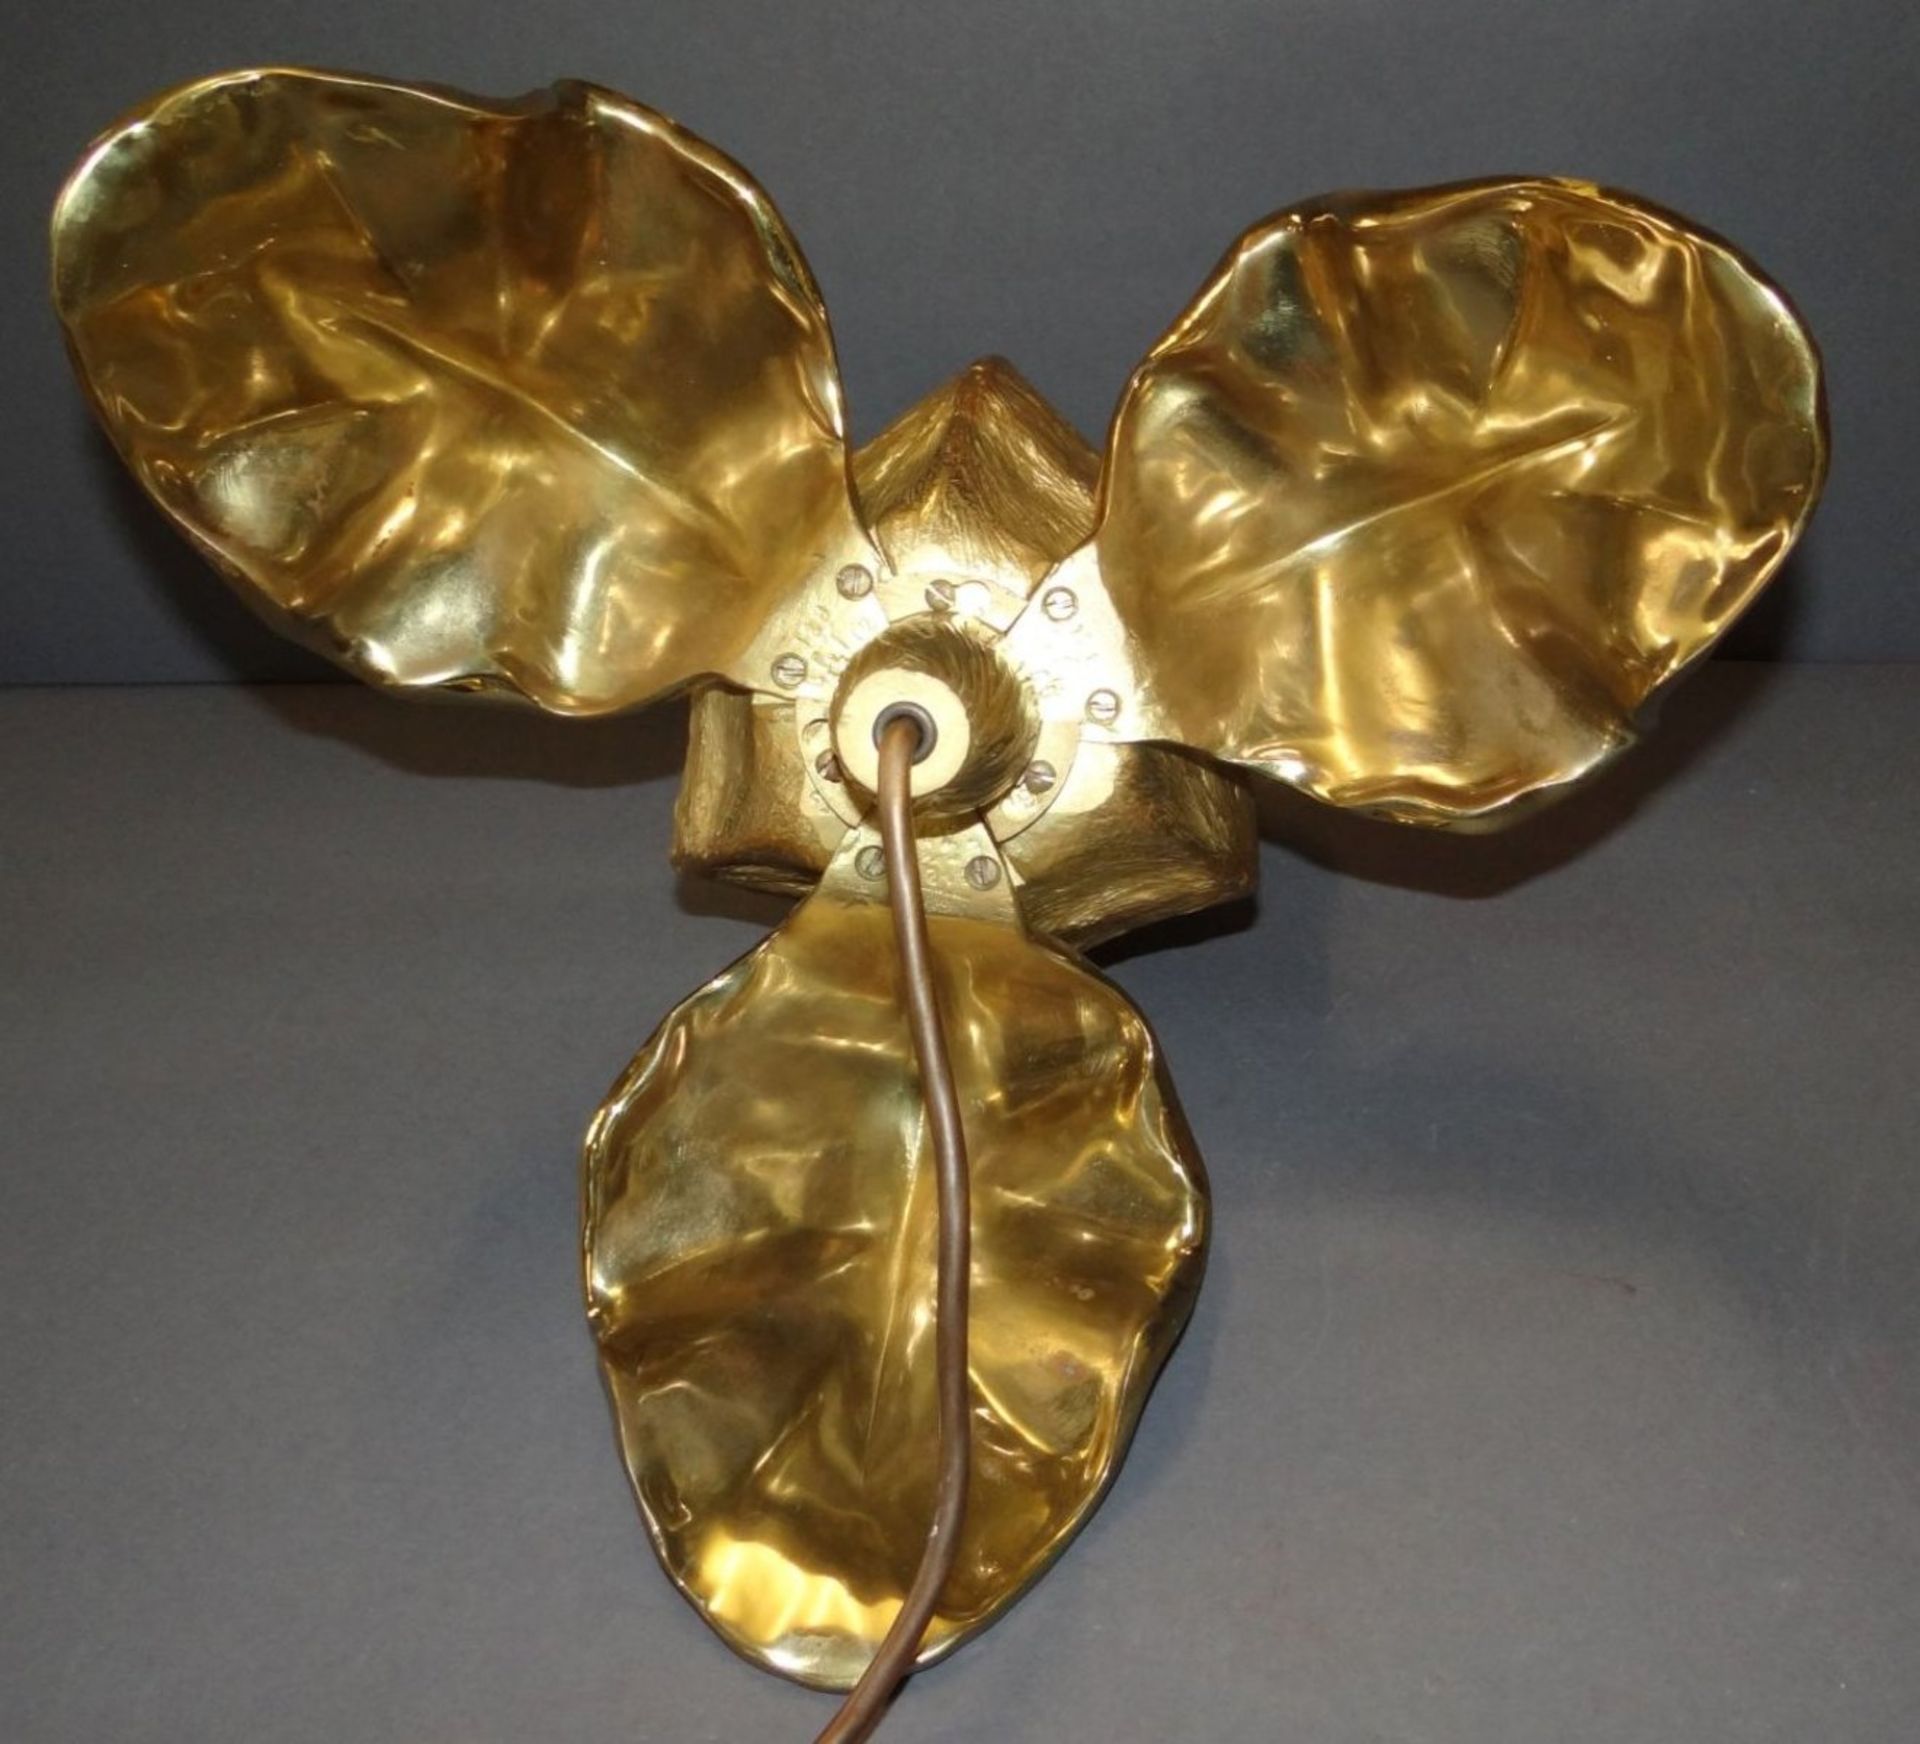 Chrystiane CHARLES (1927-2013) "Lampe dite Iris" vergoldete Bronze, um 1970, signiert, nummeriert, - Image 9 of 10